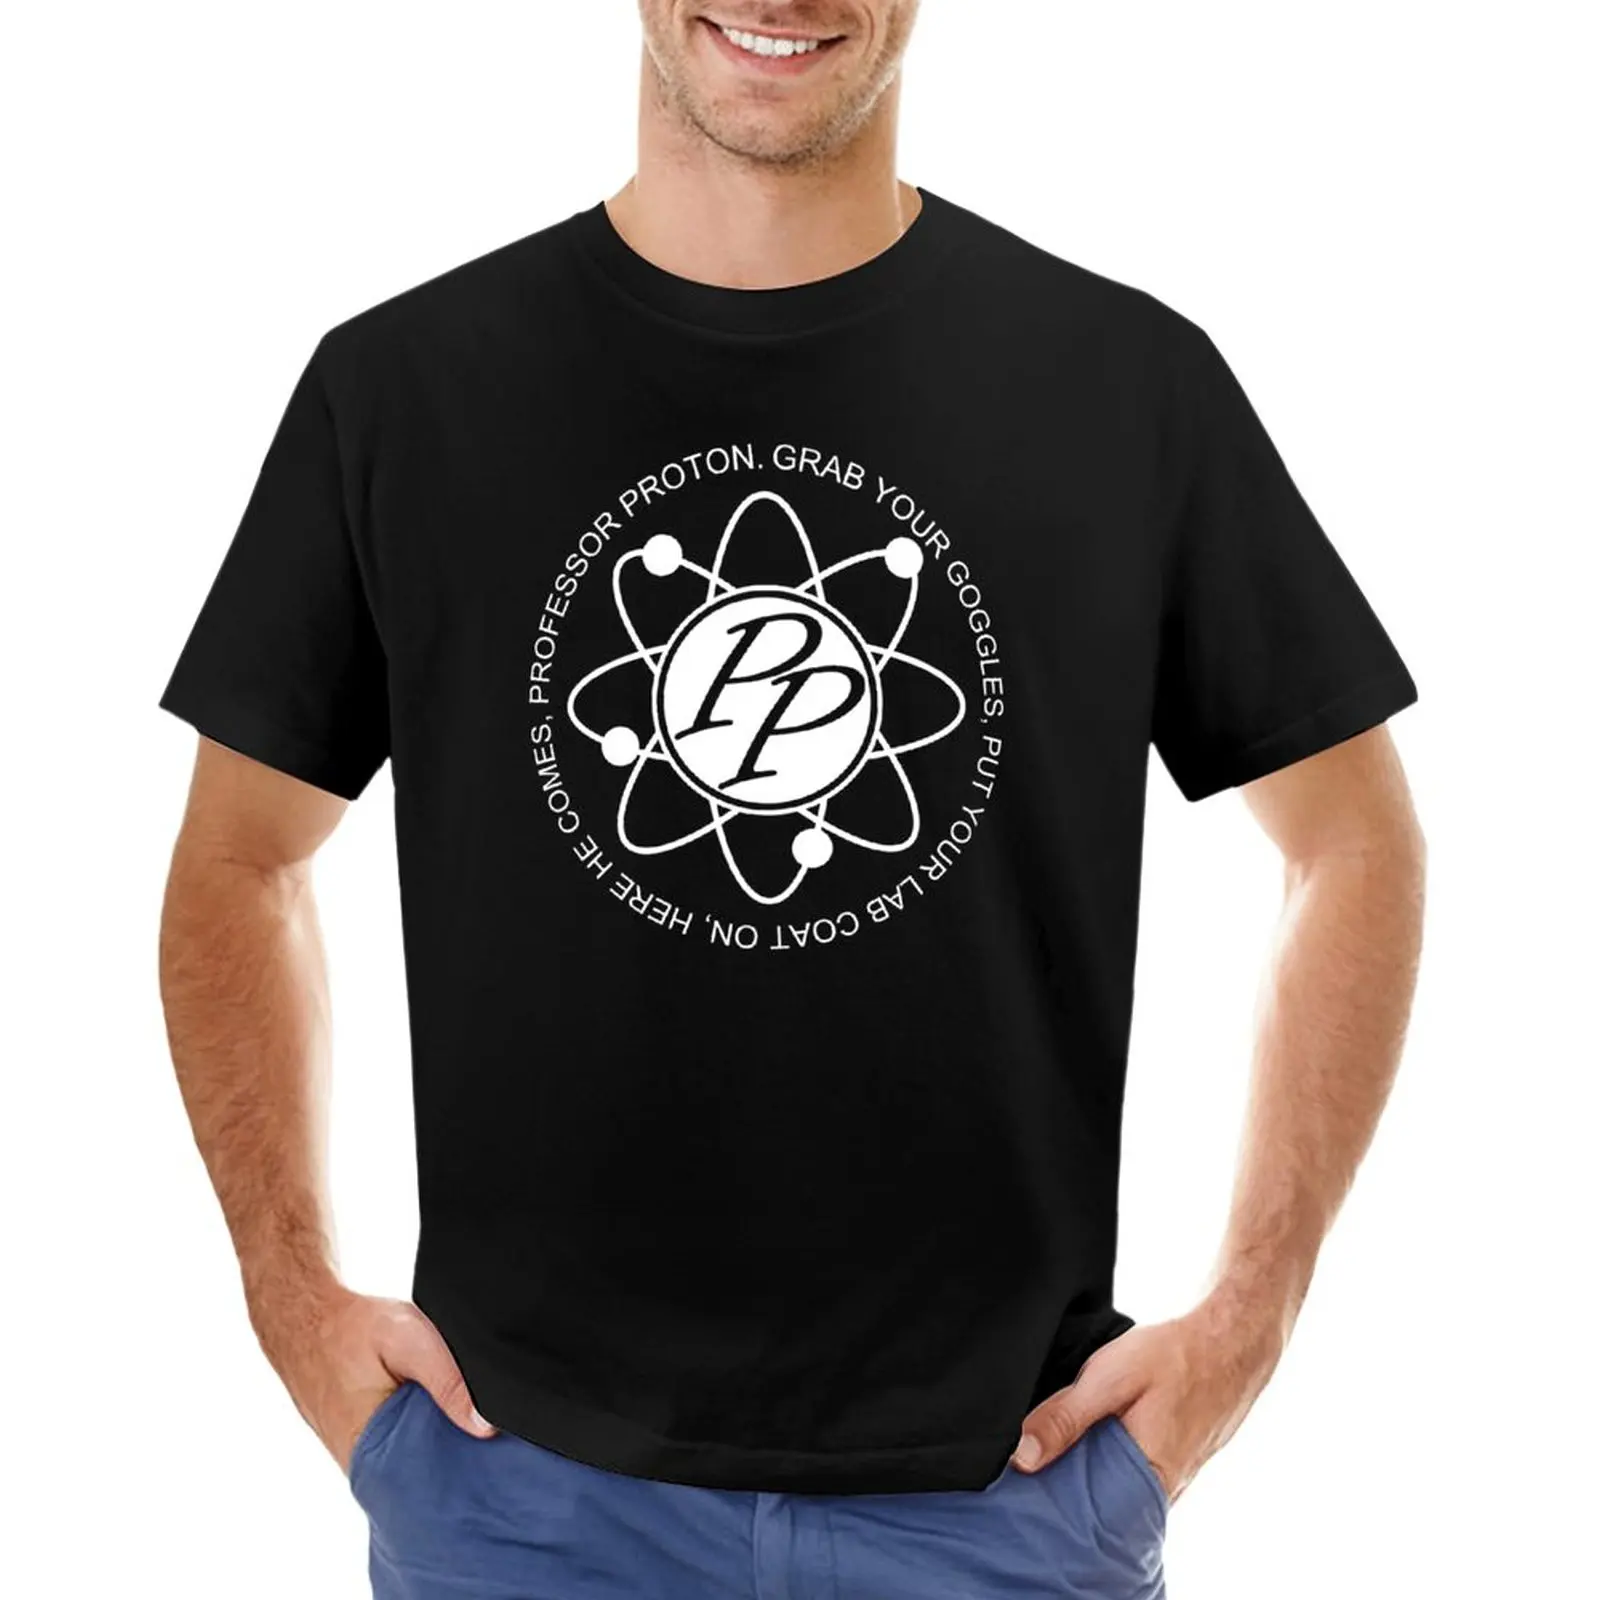 

Original Professor Proton T-Shirt animal print shirt for boys mens cotton t shirts